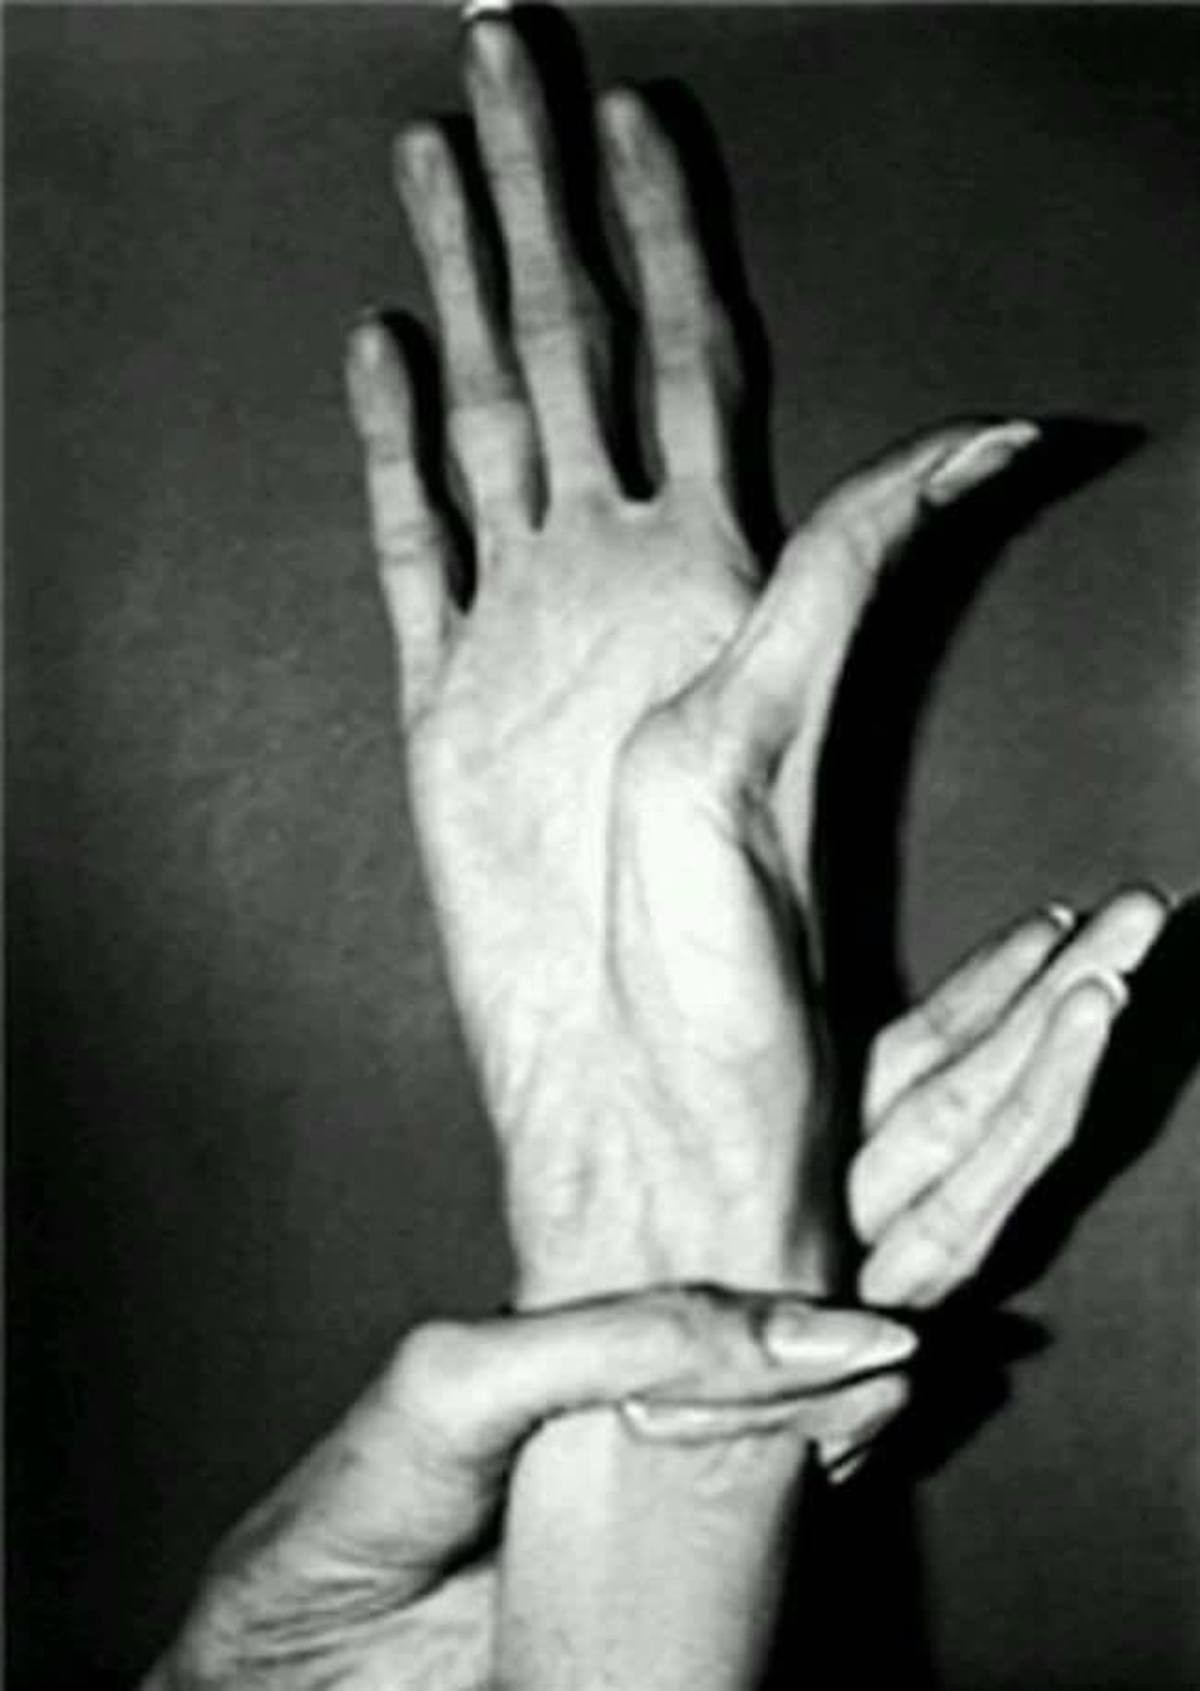 Hand of a serial killer. Tsutomu Miyazaki Thank mr skeltal.. Ayy lmao